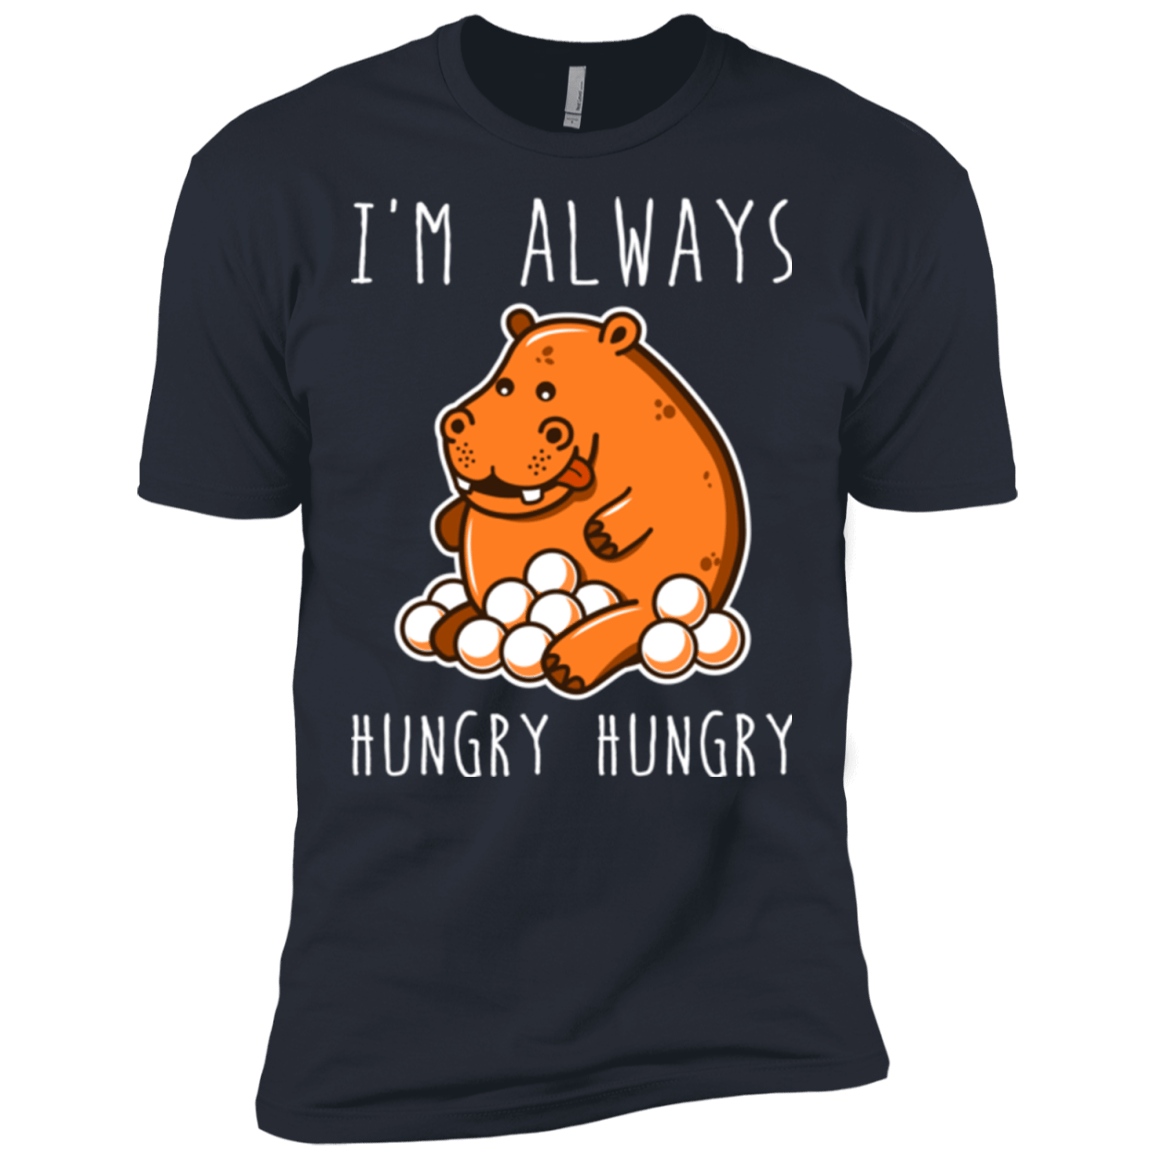 Hungry Hungry Men's Premium T-Shirt